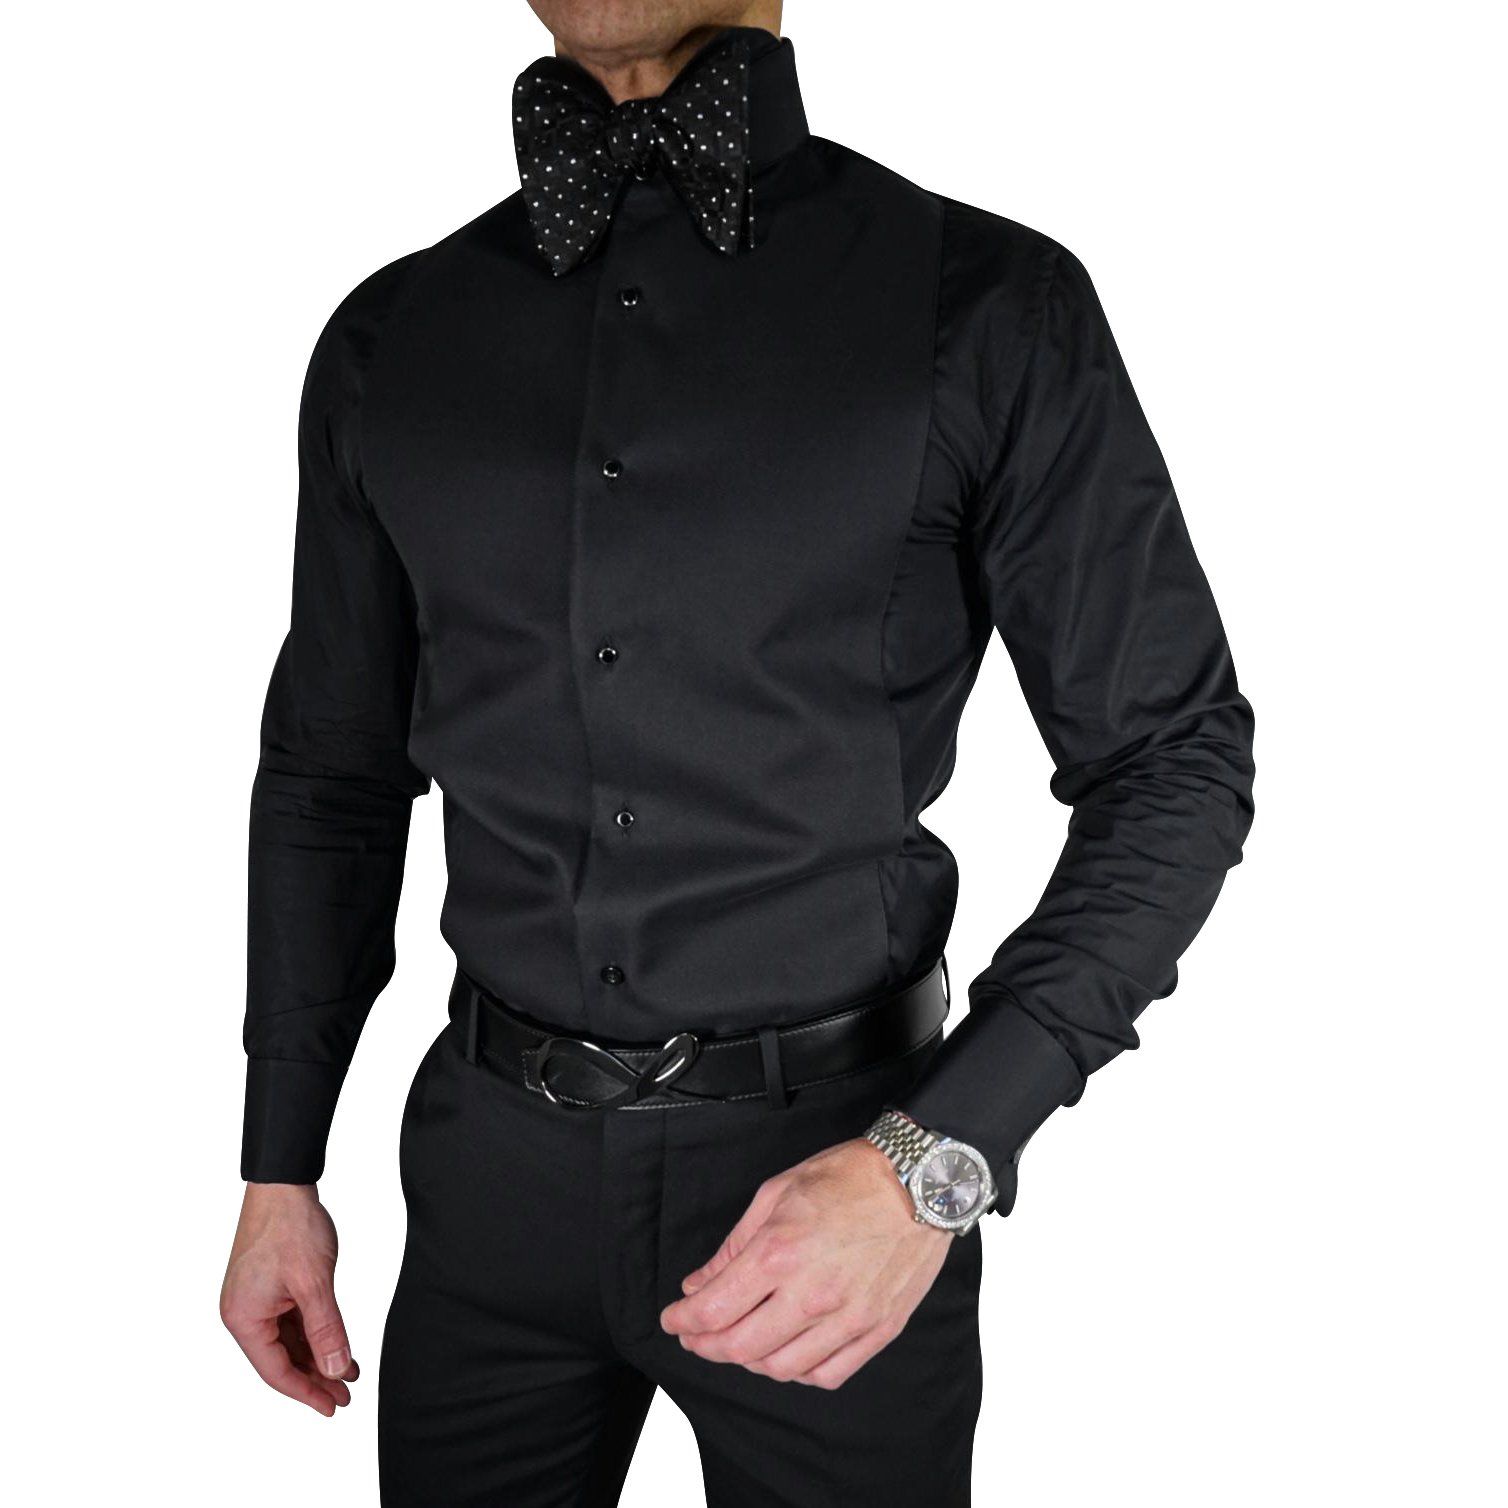 men’s black dress shirts